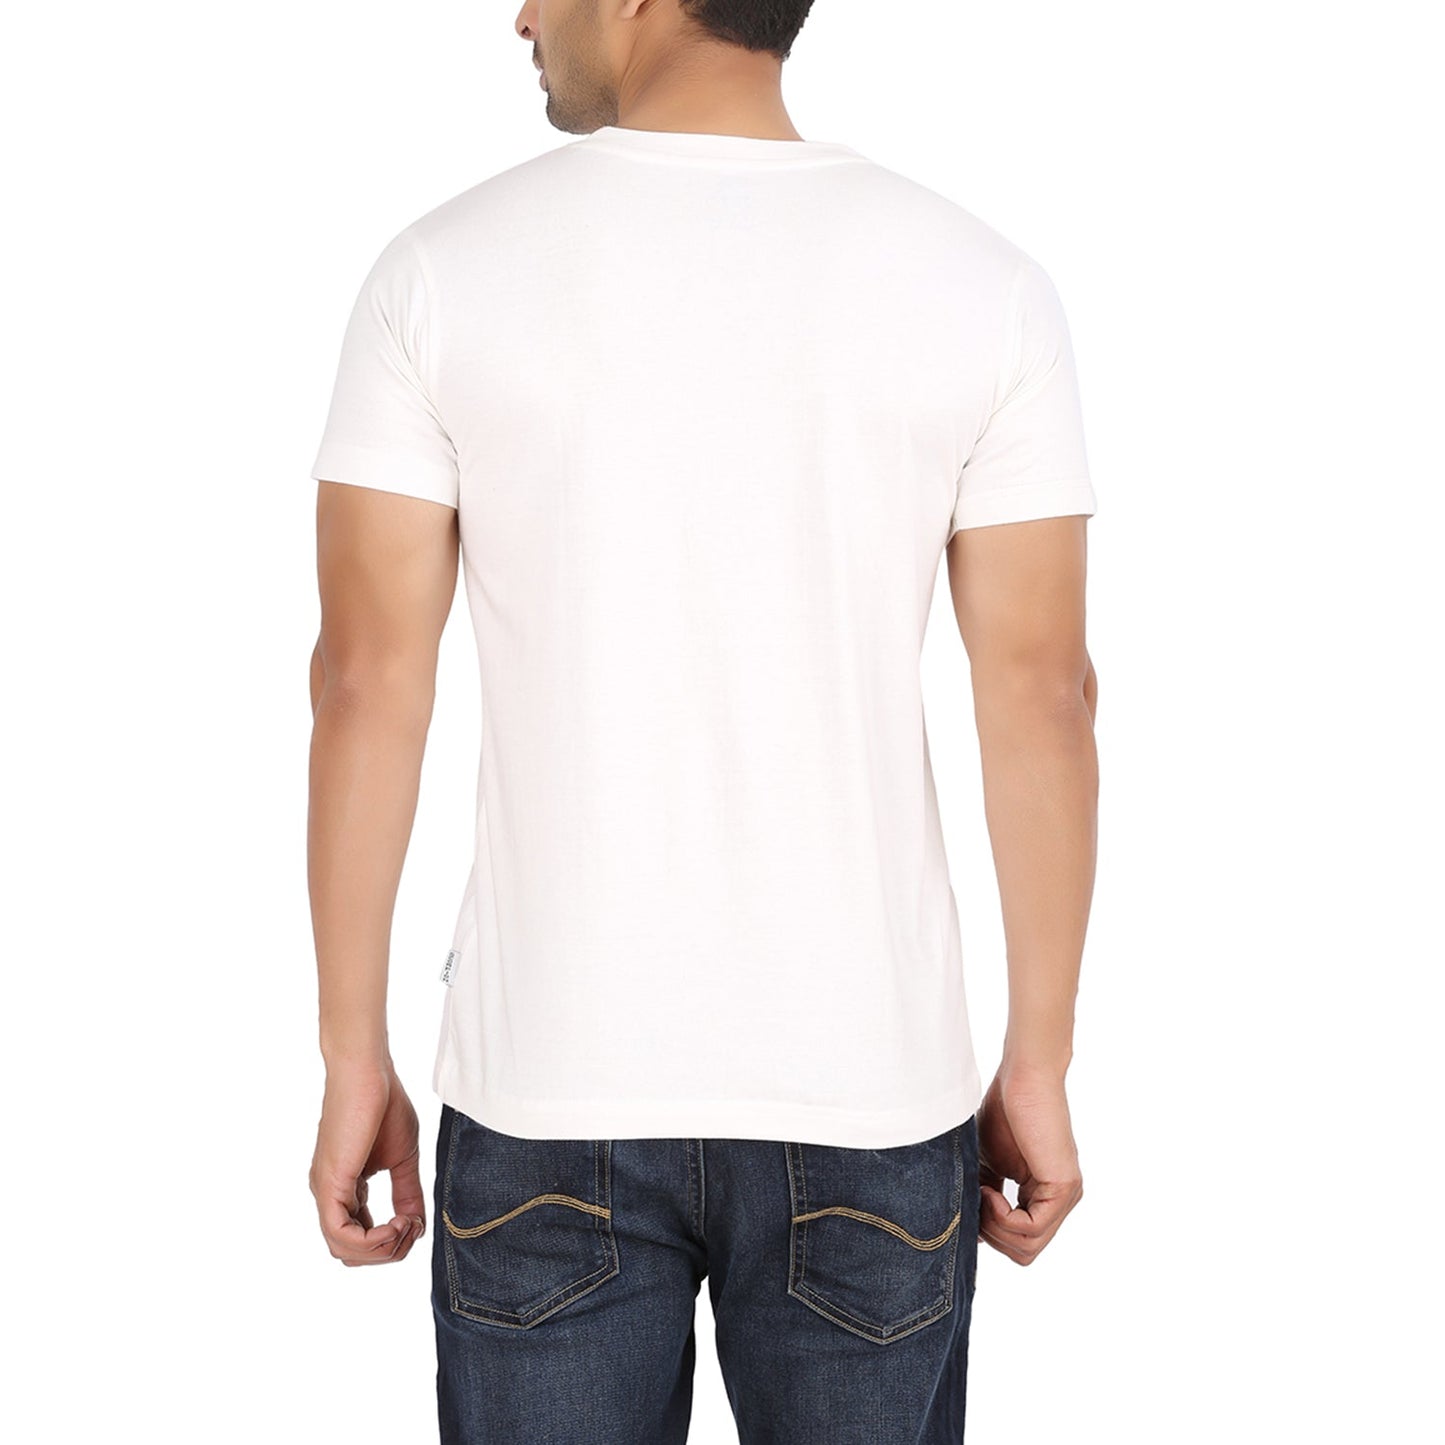 Off White Round Neck Tshirt -Style #0804